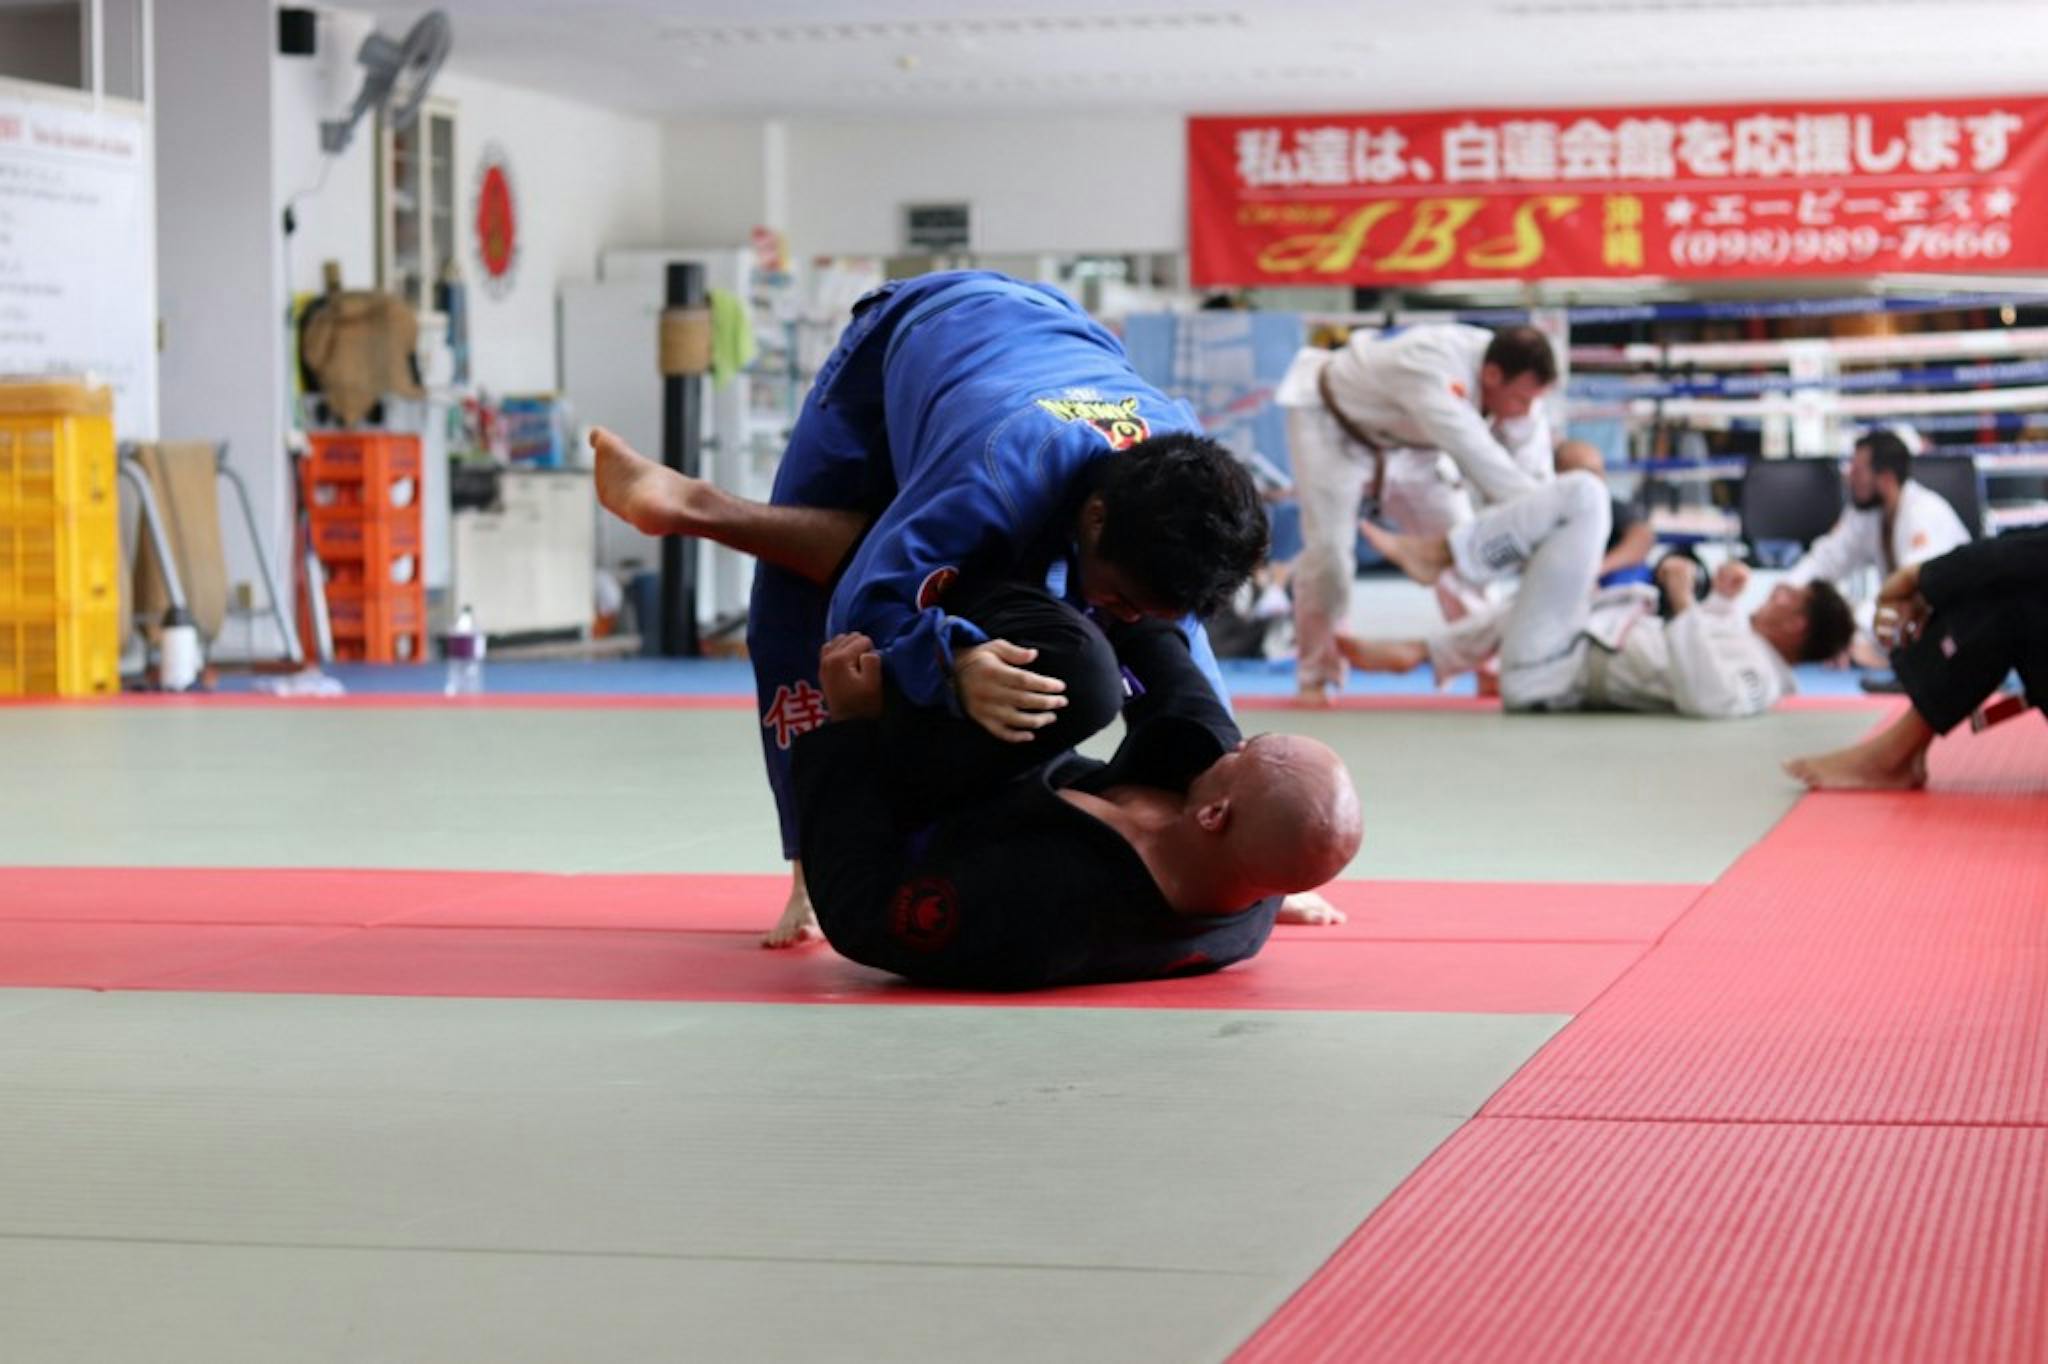 featured image - Learn Jiu-Jitsu, Program Better